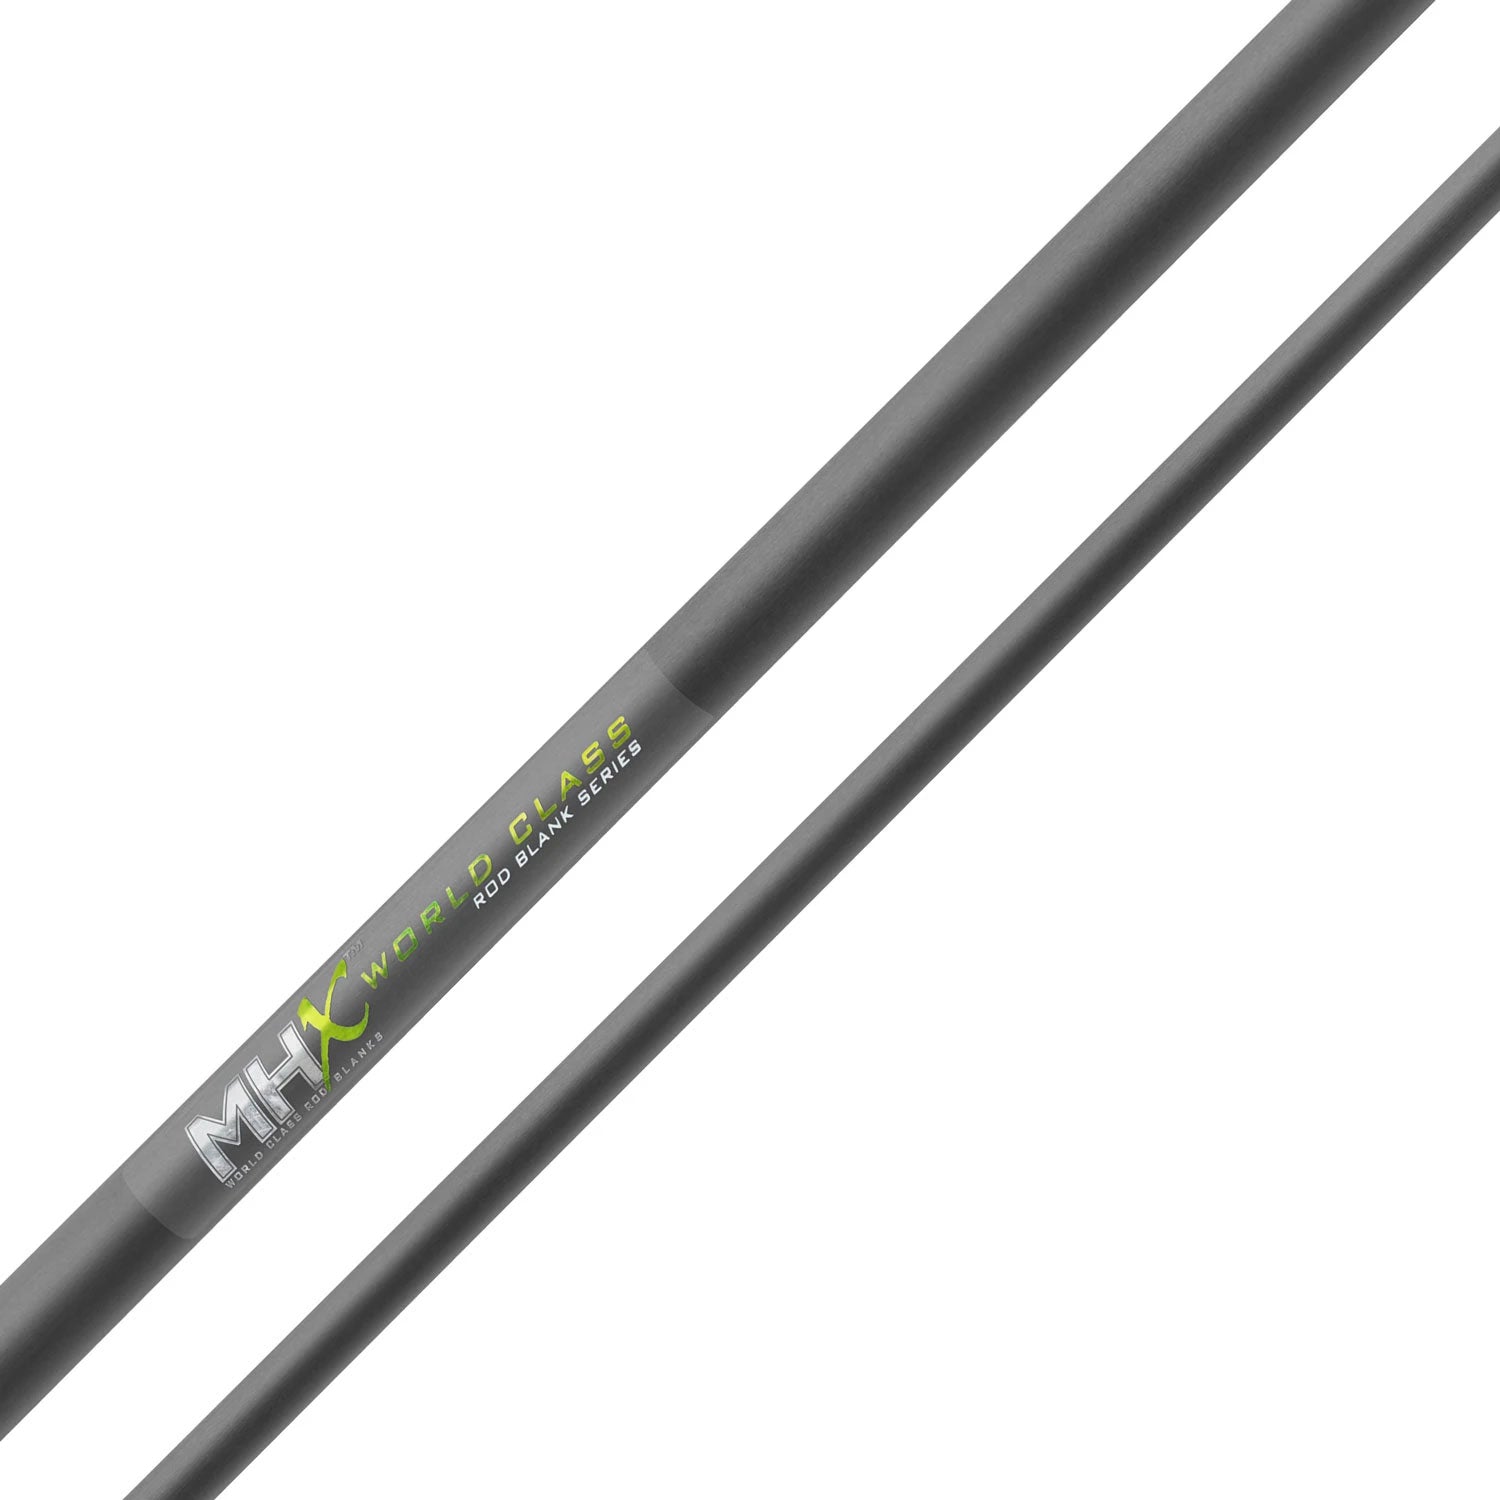 MHX 6'6" Medium Spin Jig Rod Blank - SJ783-2-MHX